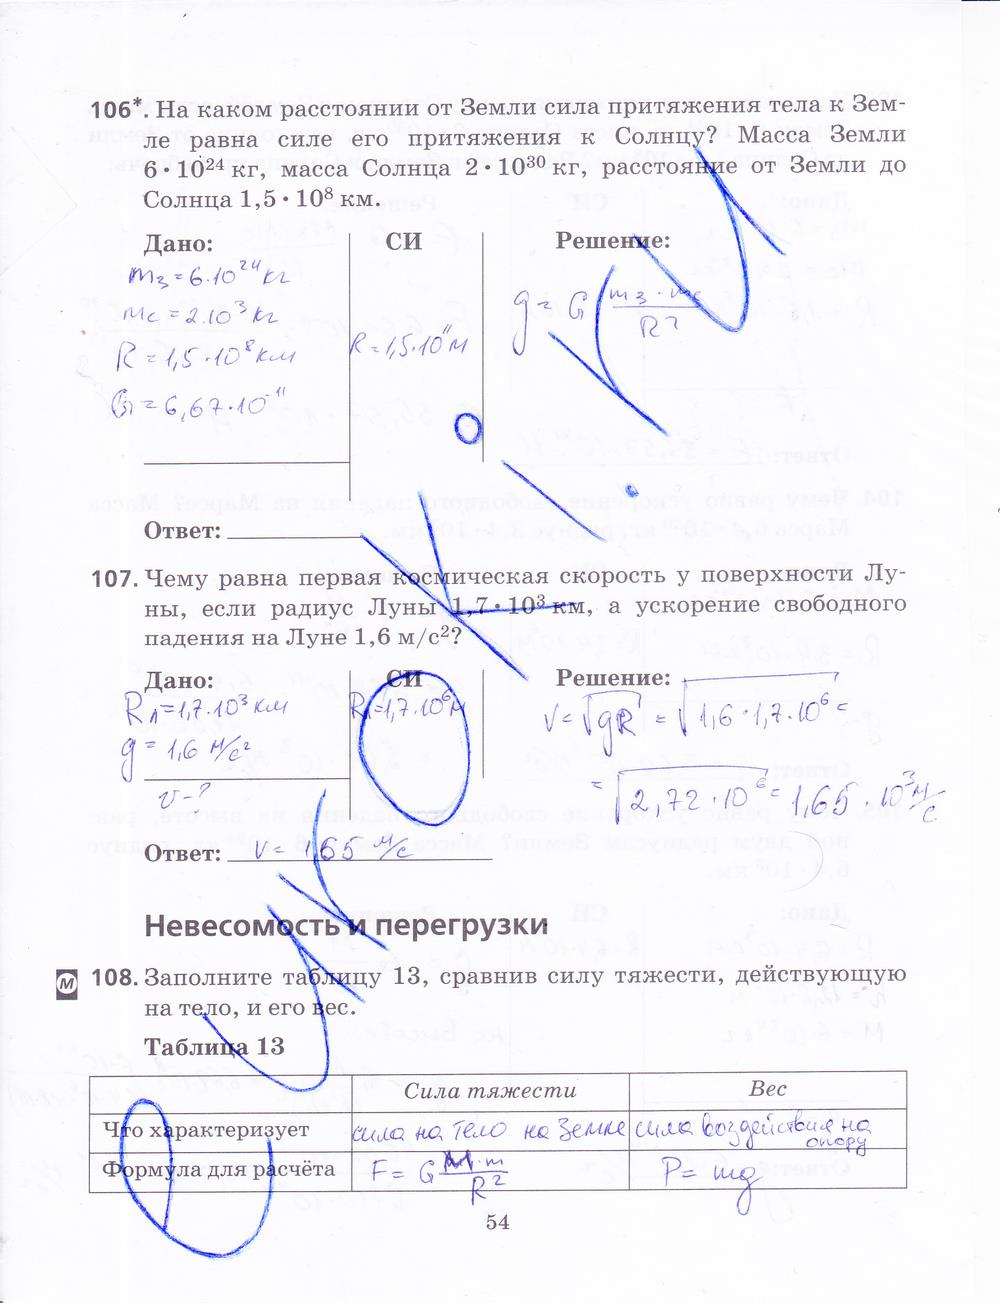 гдз 9 класс рабочая тетрадь страница 54 физика Пурышева, Важеевская, Чаругин